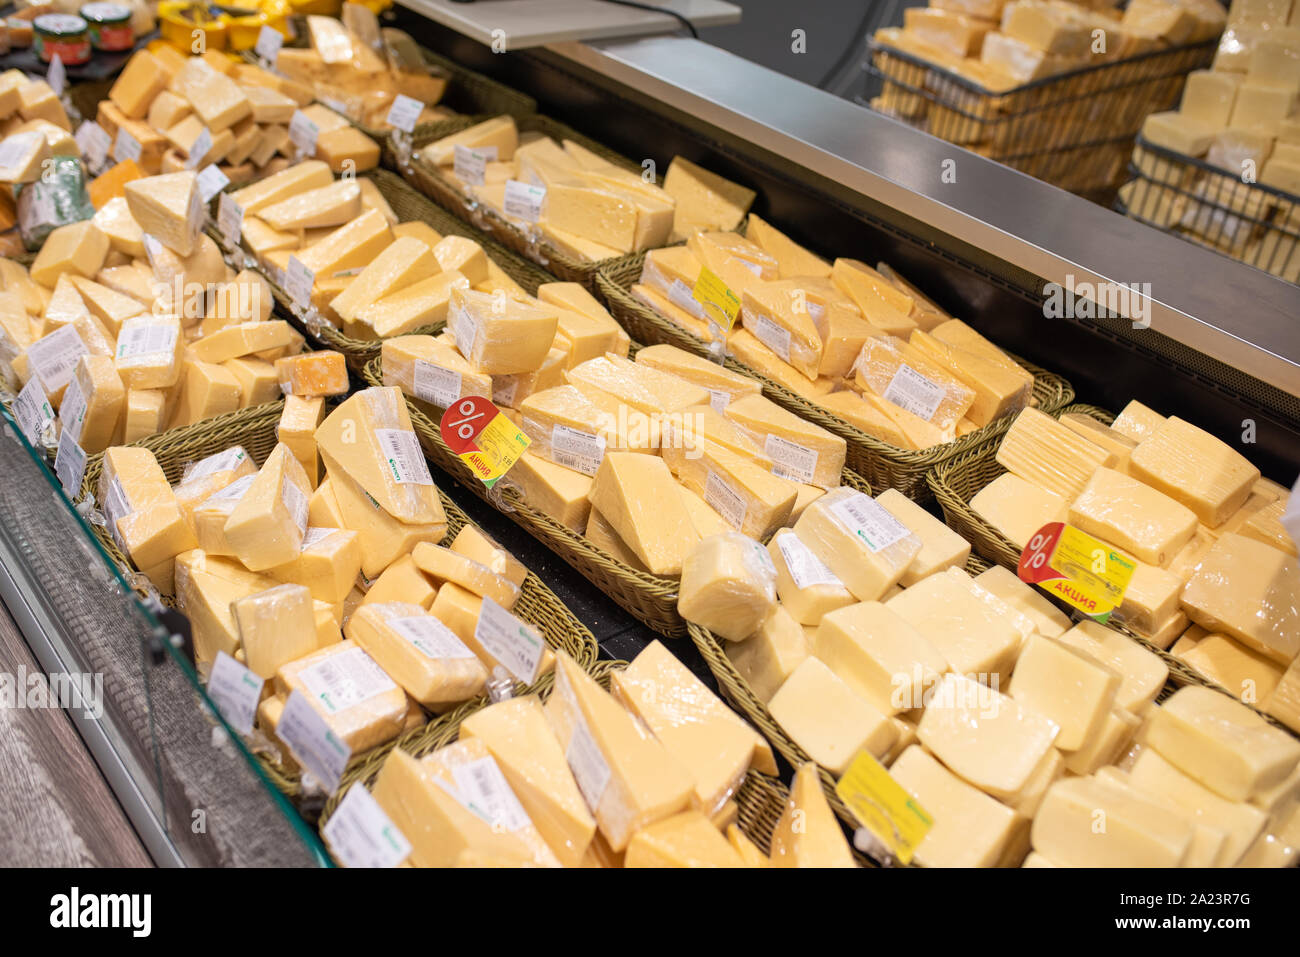 https://c8.alamy.com/comp/2A23R7G/minsk-belarus-september-27-2019-supermarket-with-various-cheeses-2A23R7G.jpg